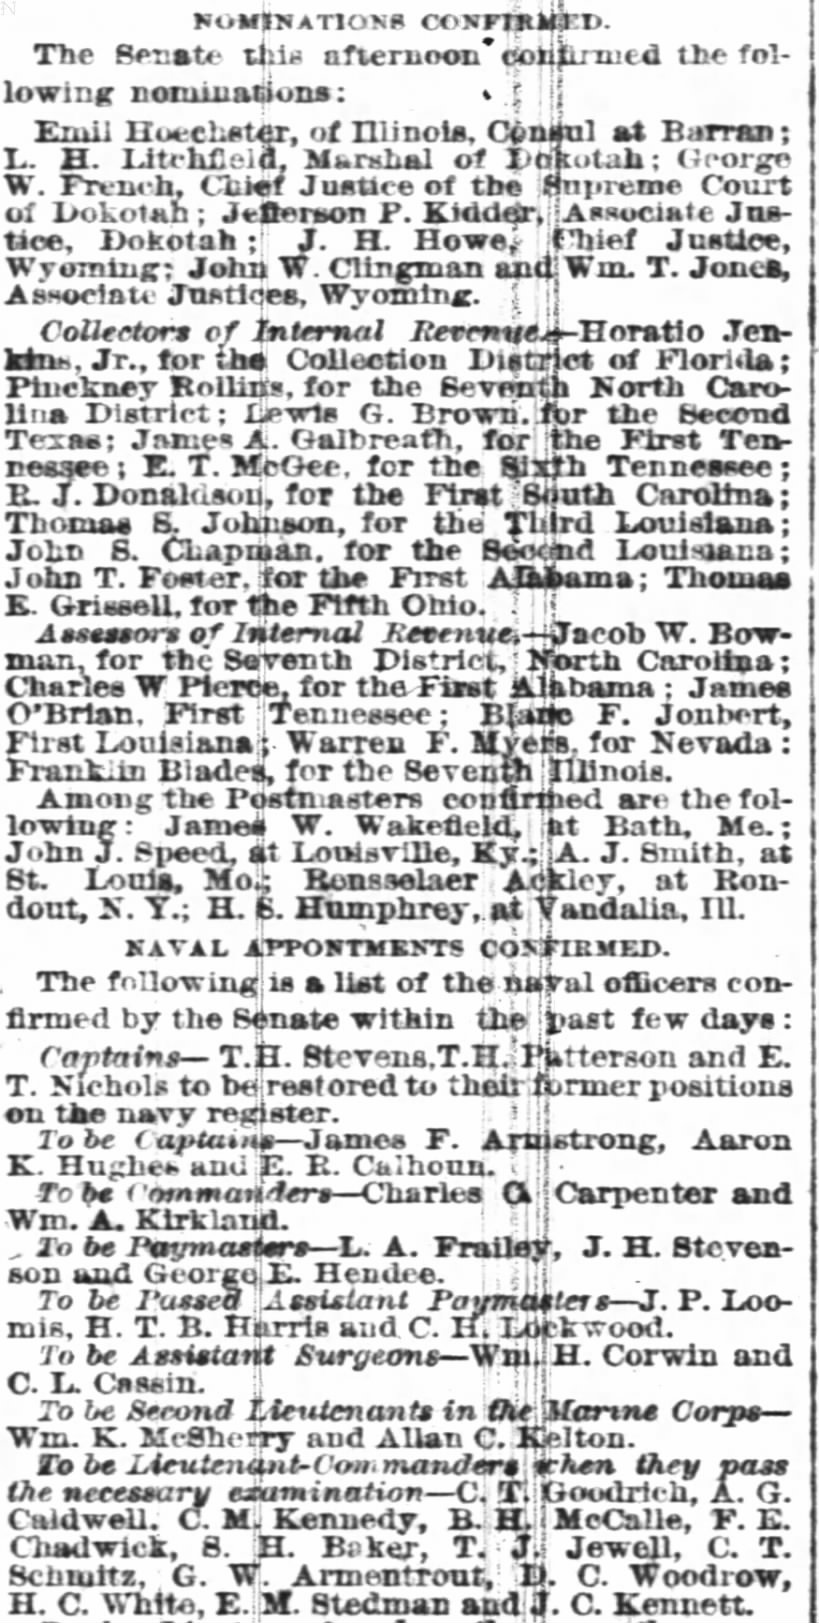 Edward M. Stedman order for promotion The New York Times 7 April 1869
